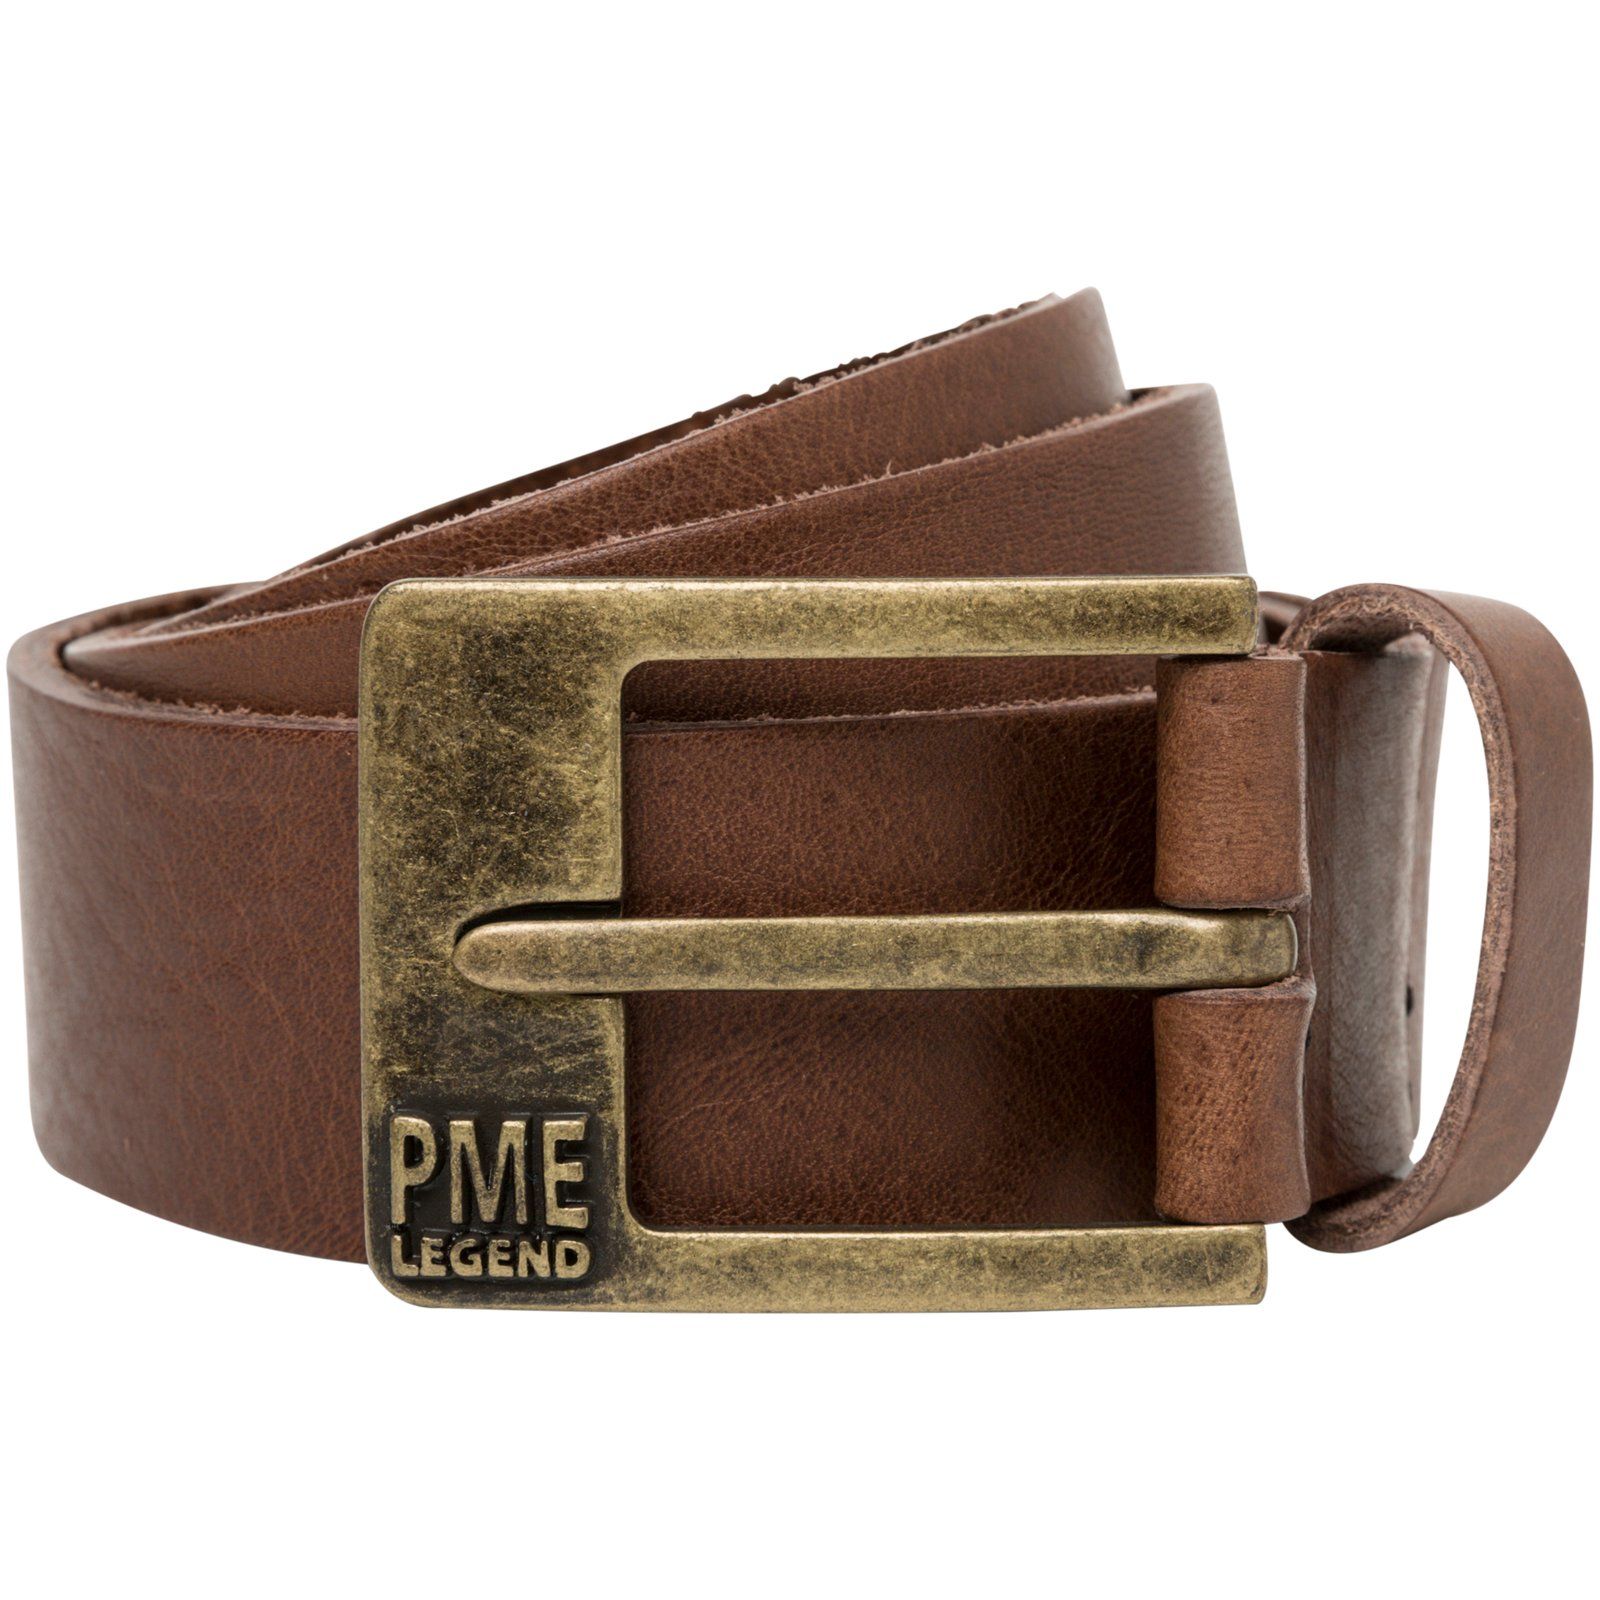 PME Legend Belt Brown size 41.3